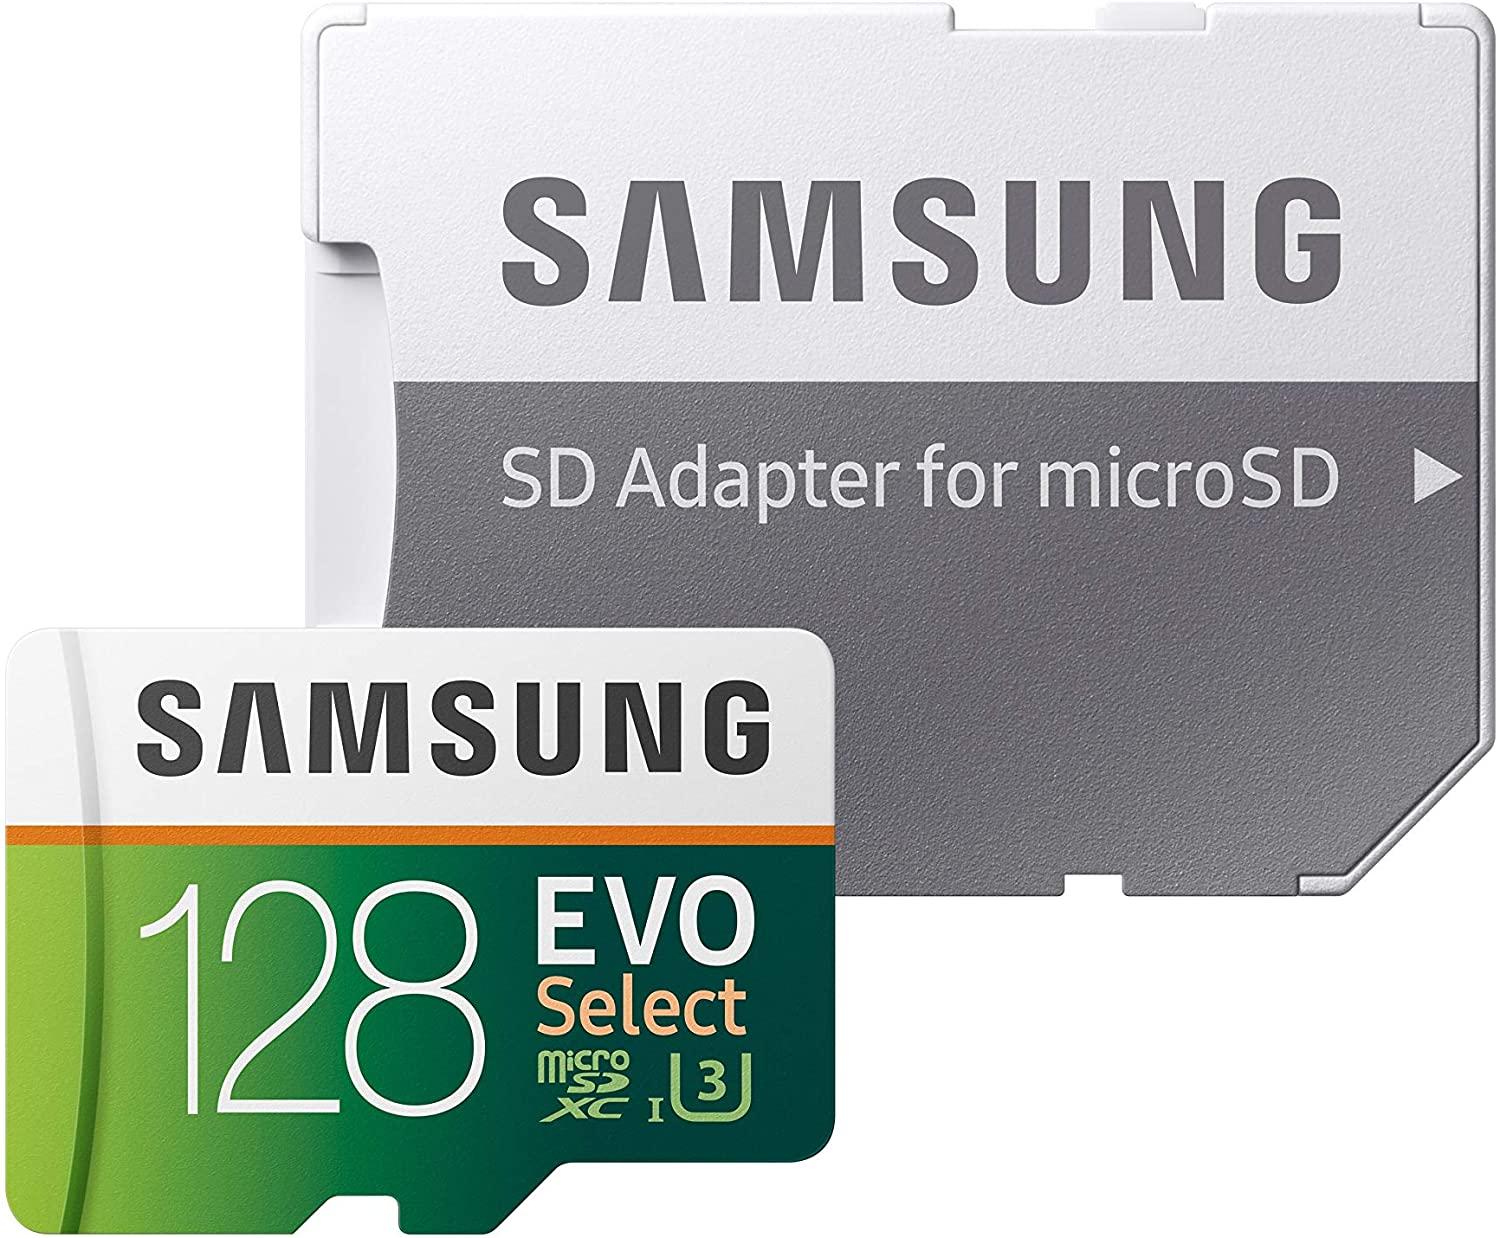 128GB Samsung EVO Select microSDXC UHS-I U3 Memory Card with Adapter for $18.99